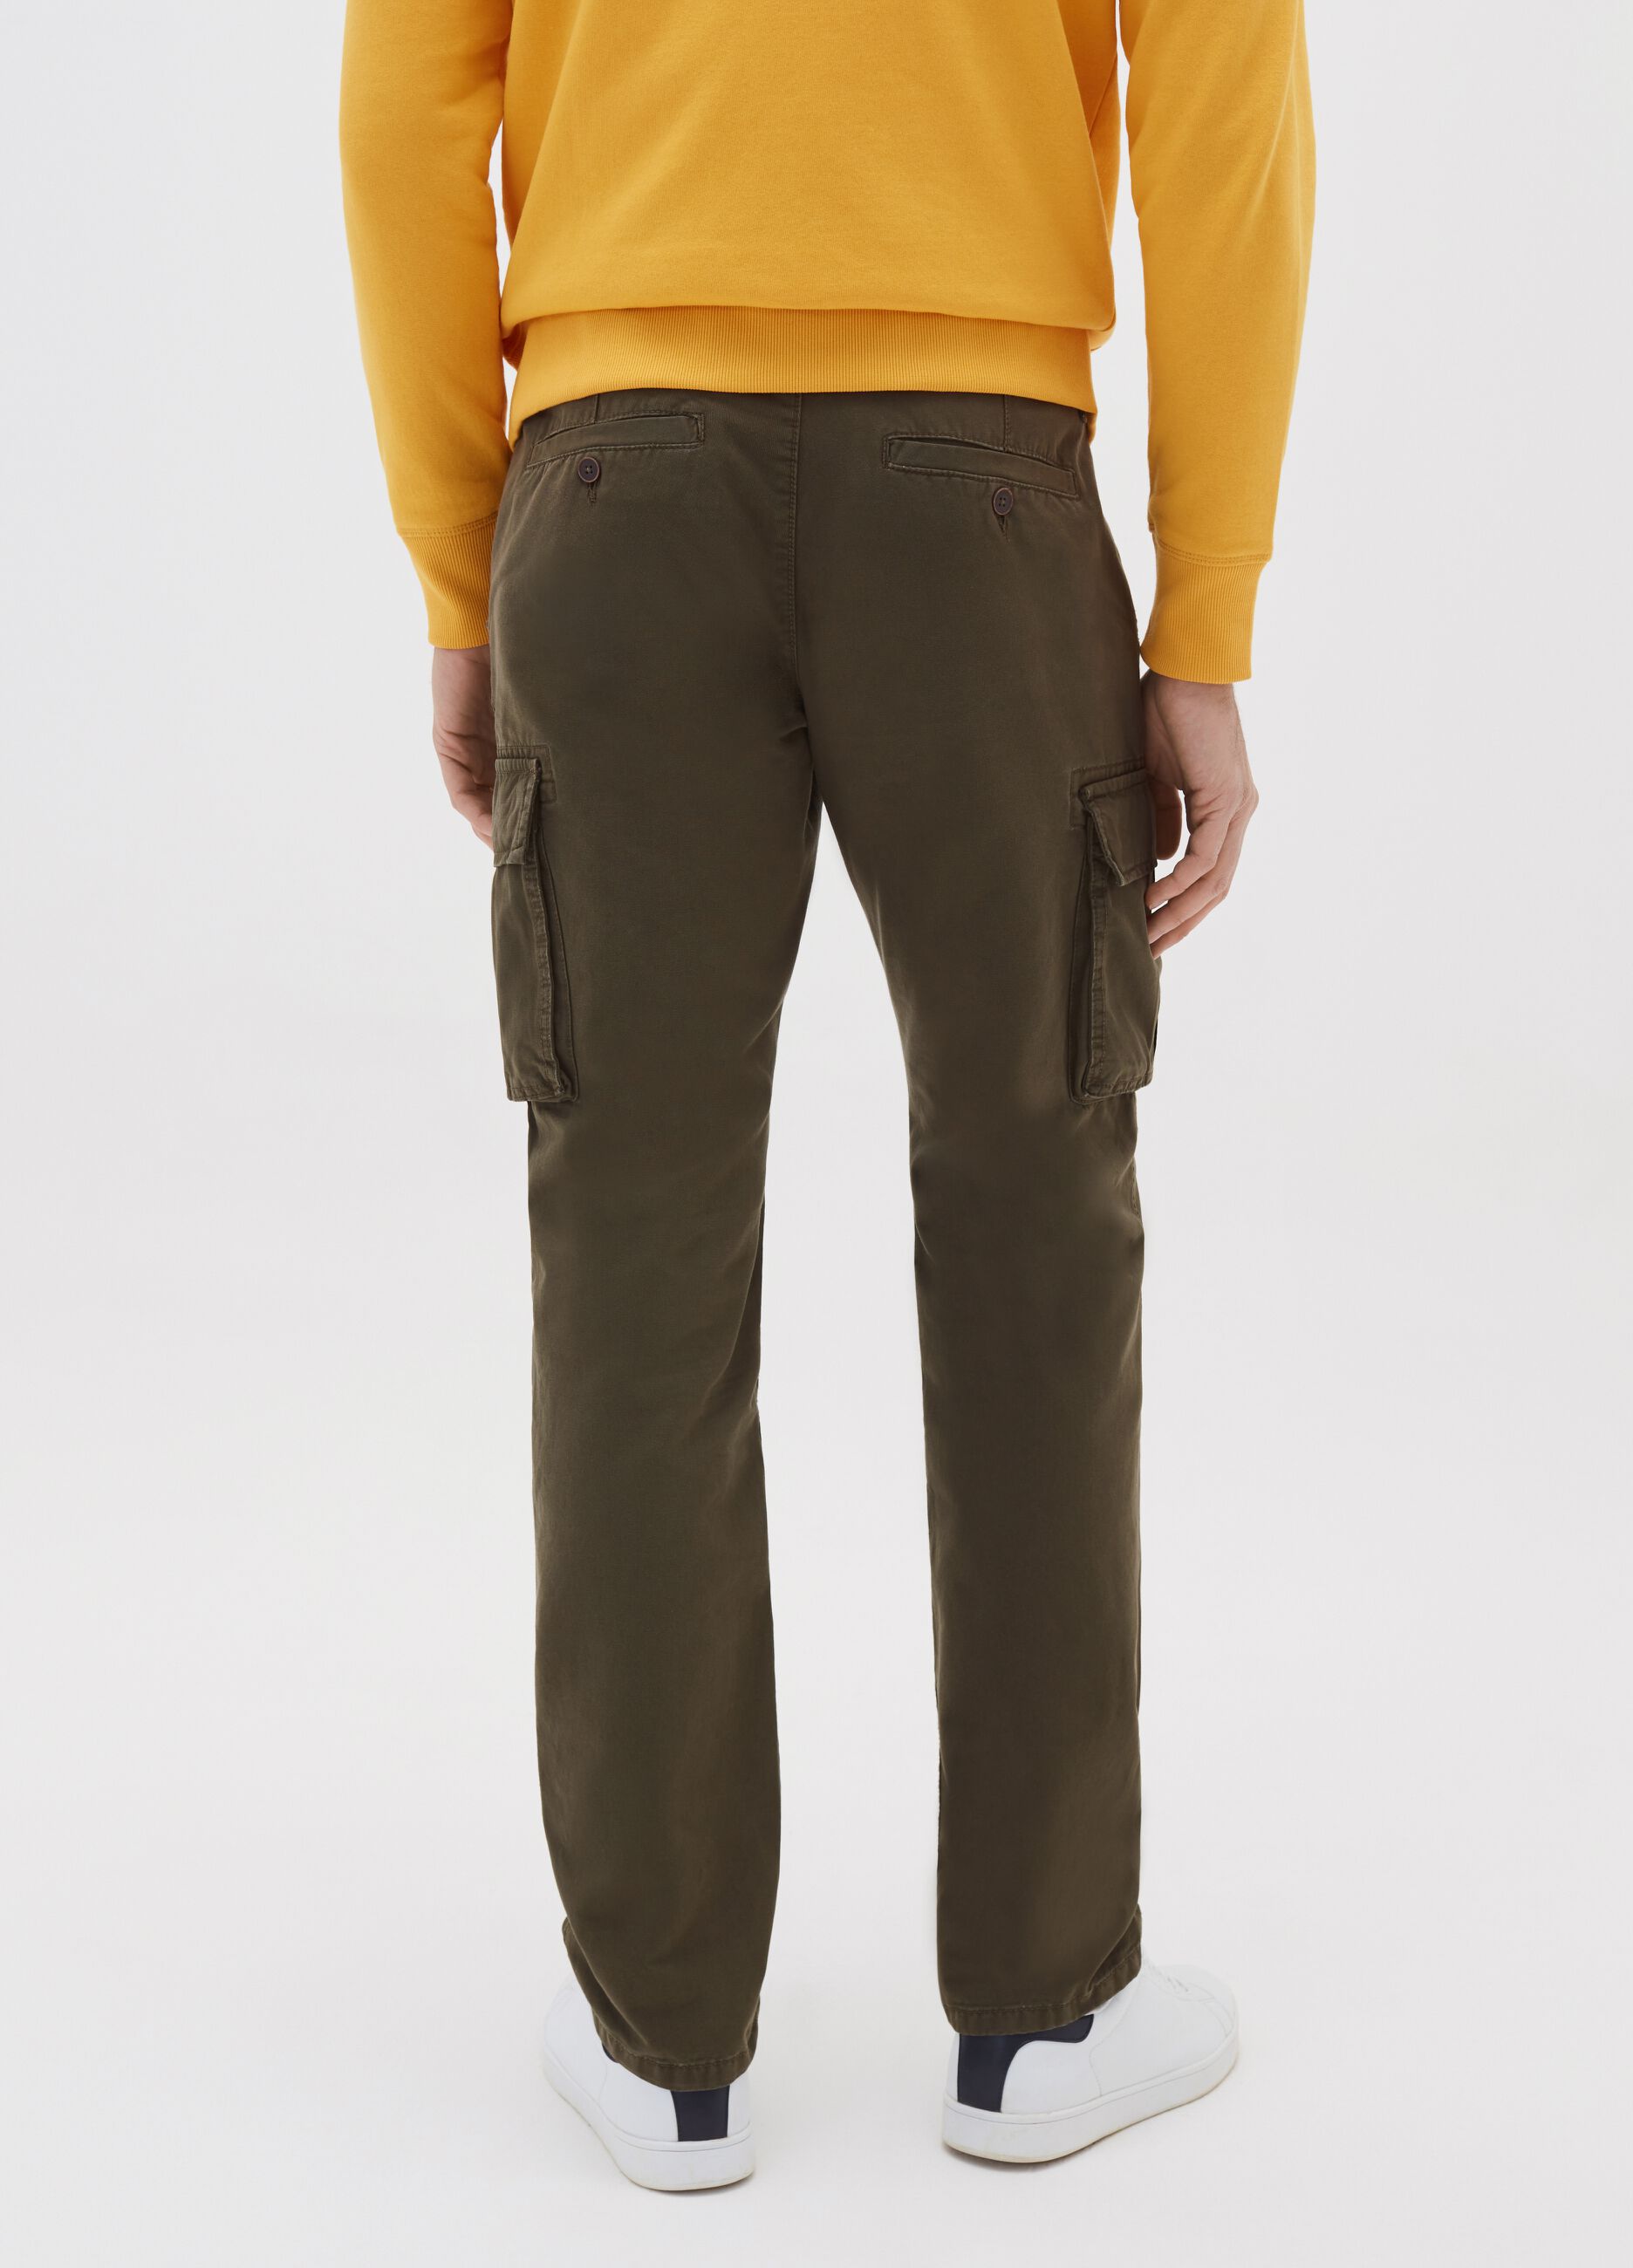 Solid colour 100% cotton cargo trousers